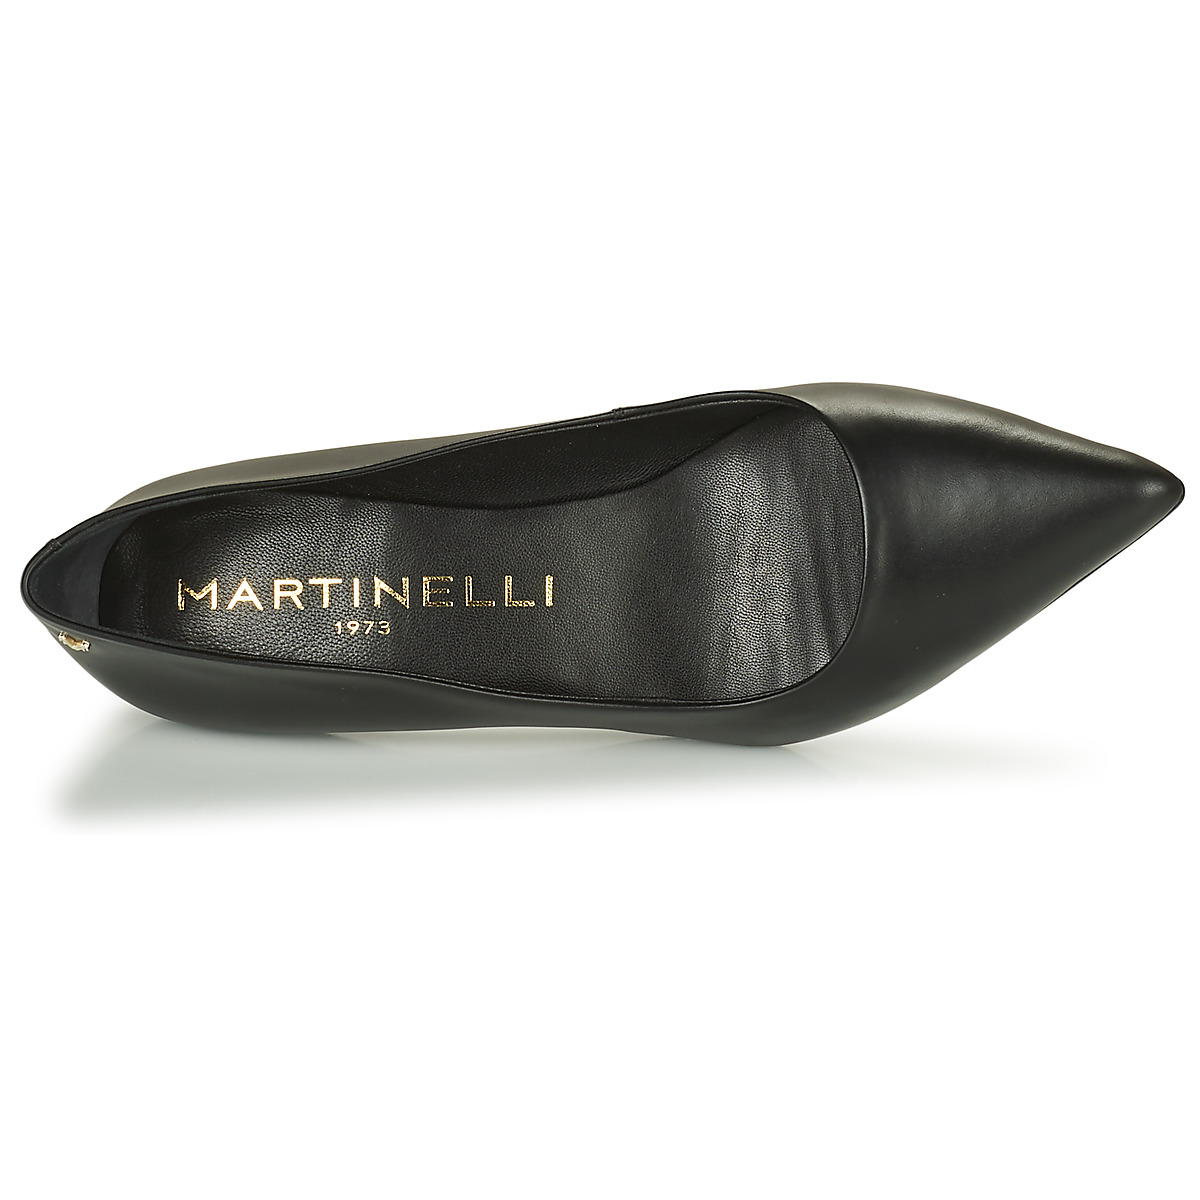 Martinelli Noir FONTAINE 1490 tZ6H9Gdo